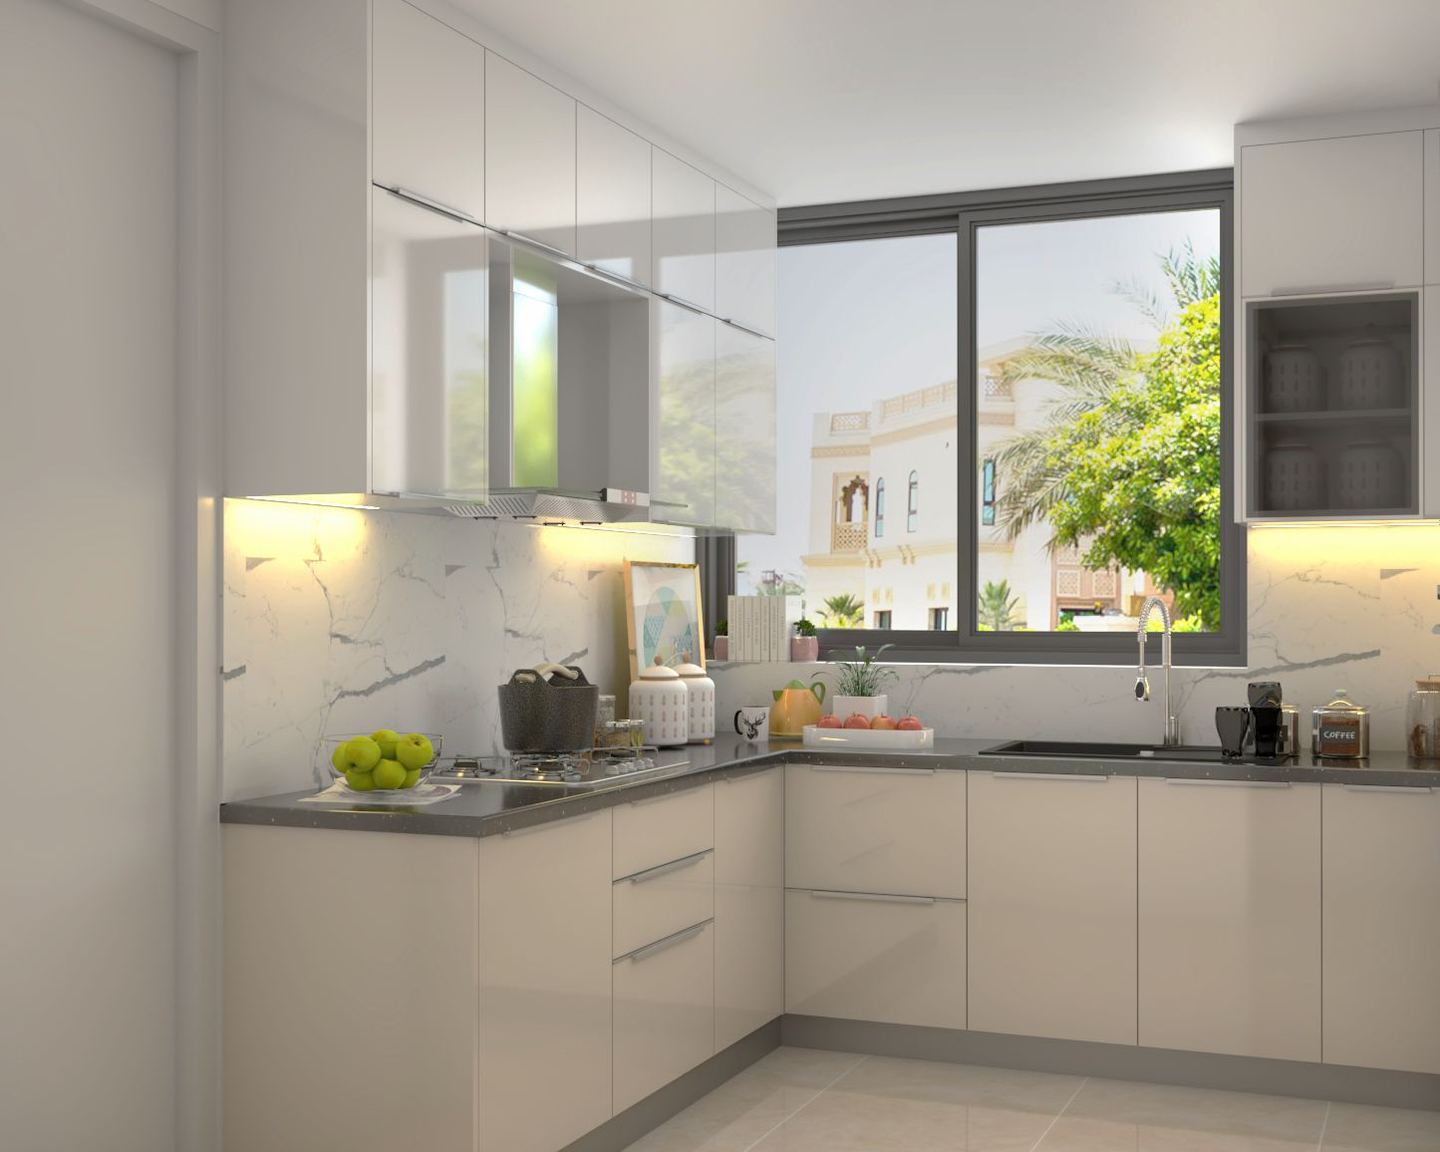 Contemporary U-Shaped Kitchen Design With High-Gloss Laminates